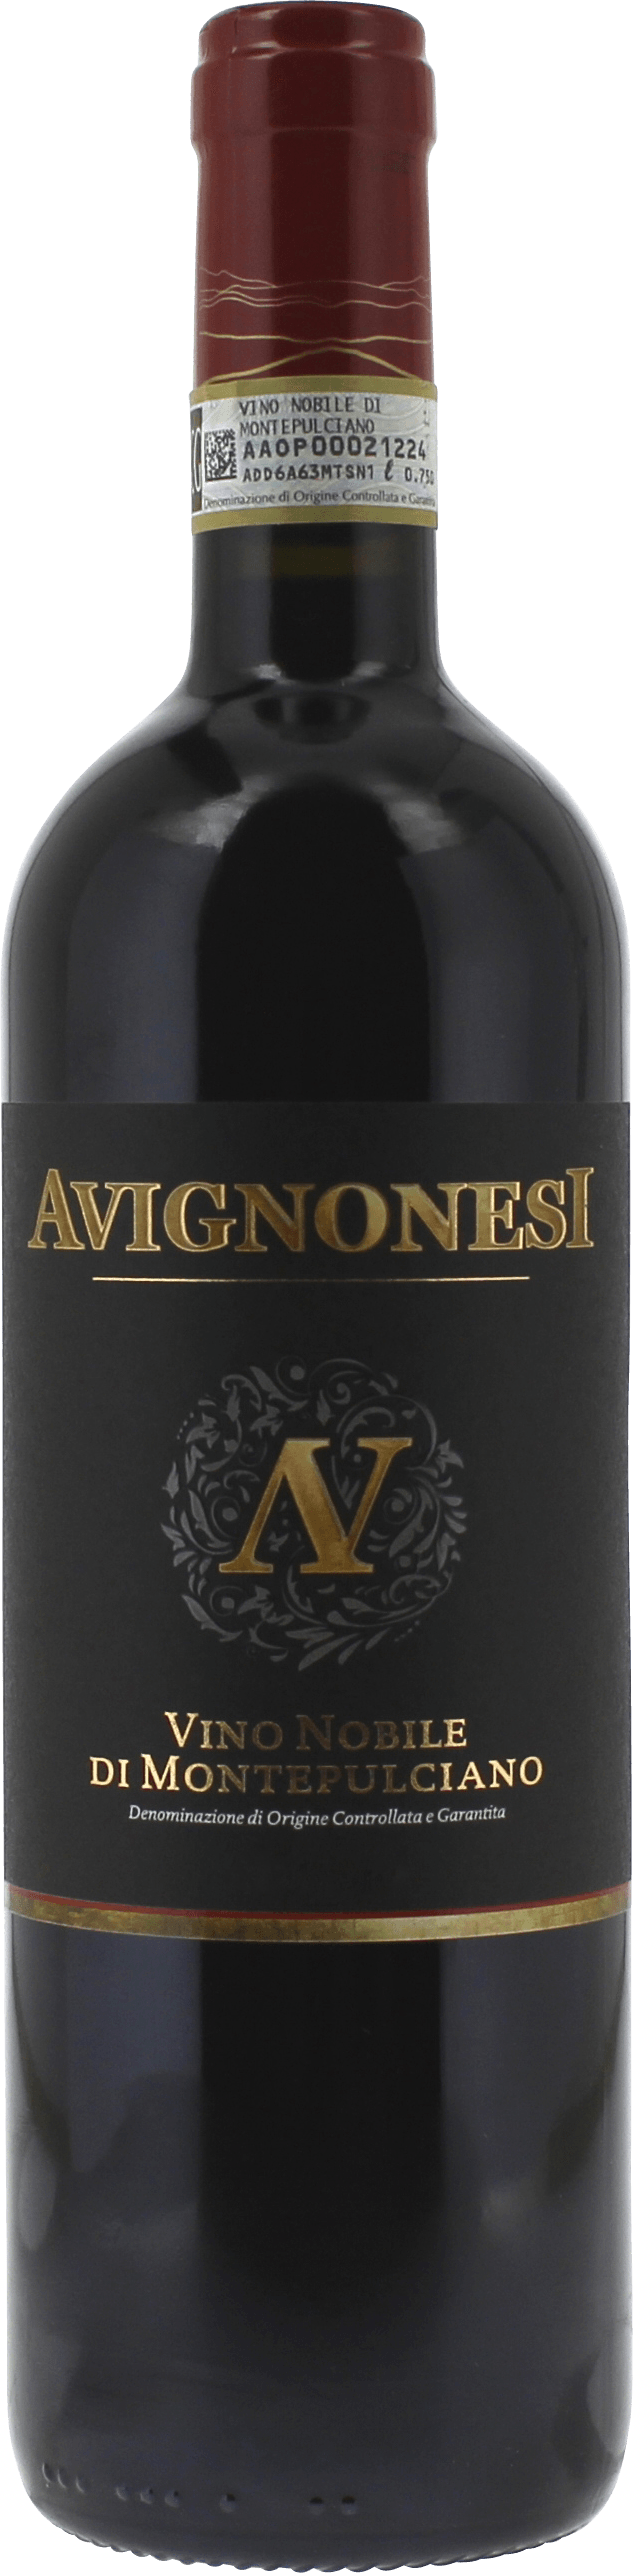 Avignonesi -  prugnolo gentile -vino nobile di montepulciano 2015  , Vin italien